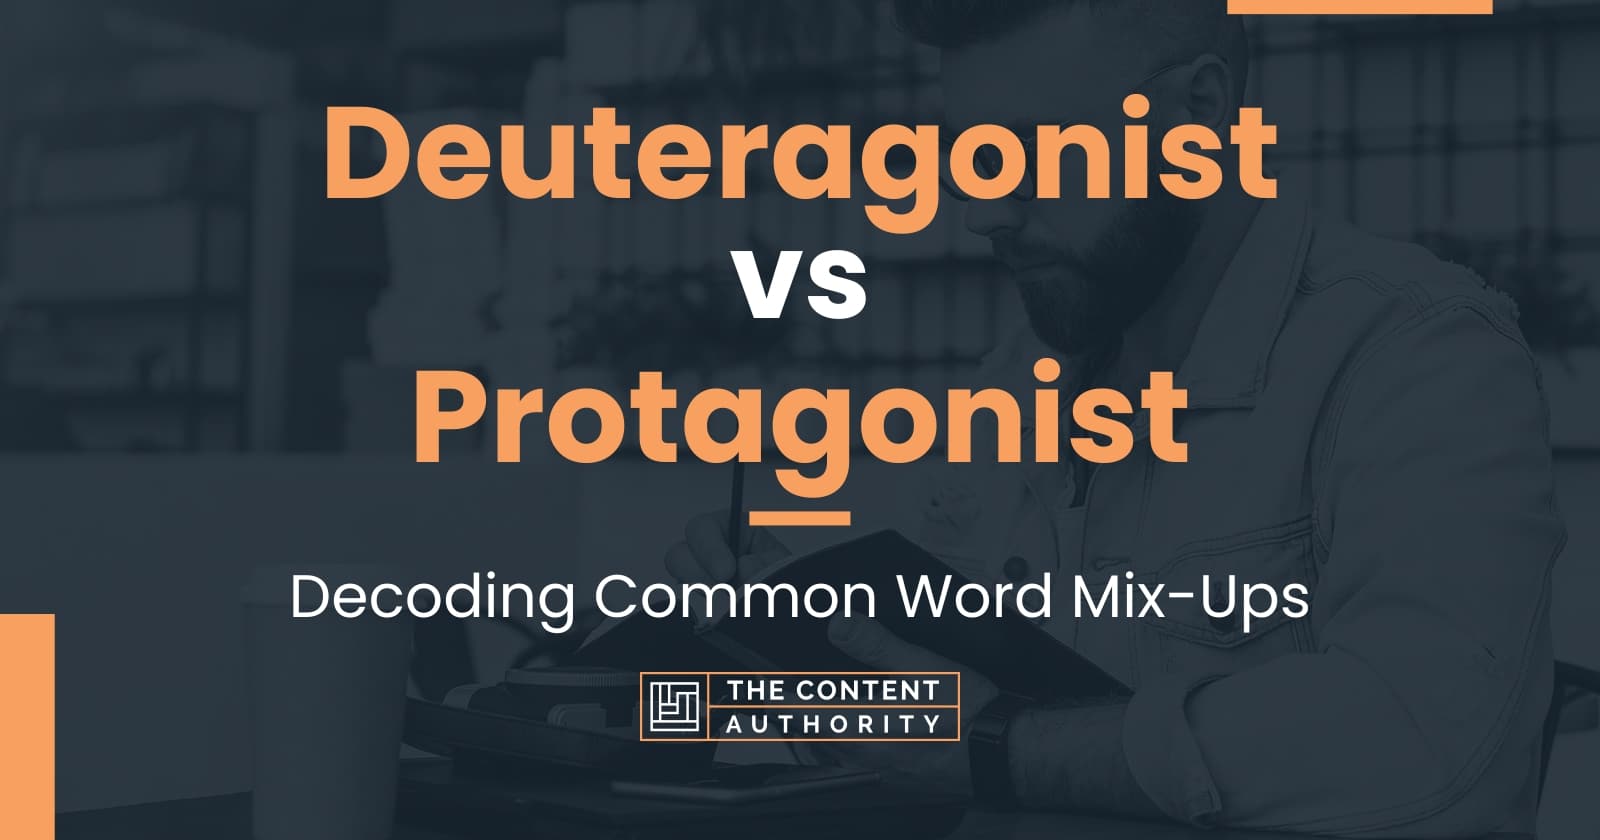 Deuteragonist vs Protagonist: Decoding Common Word Mix-Ups